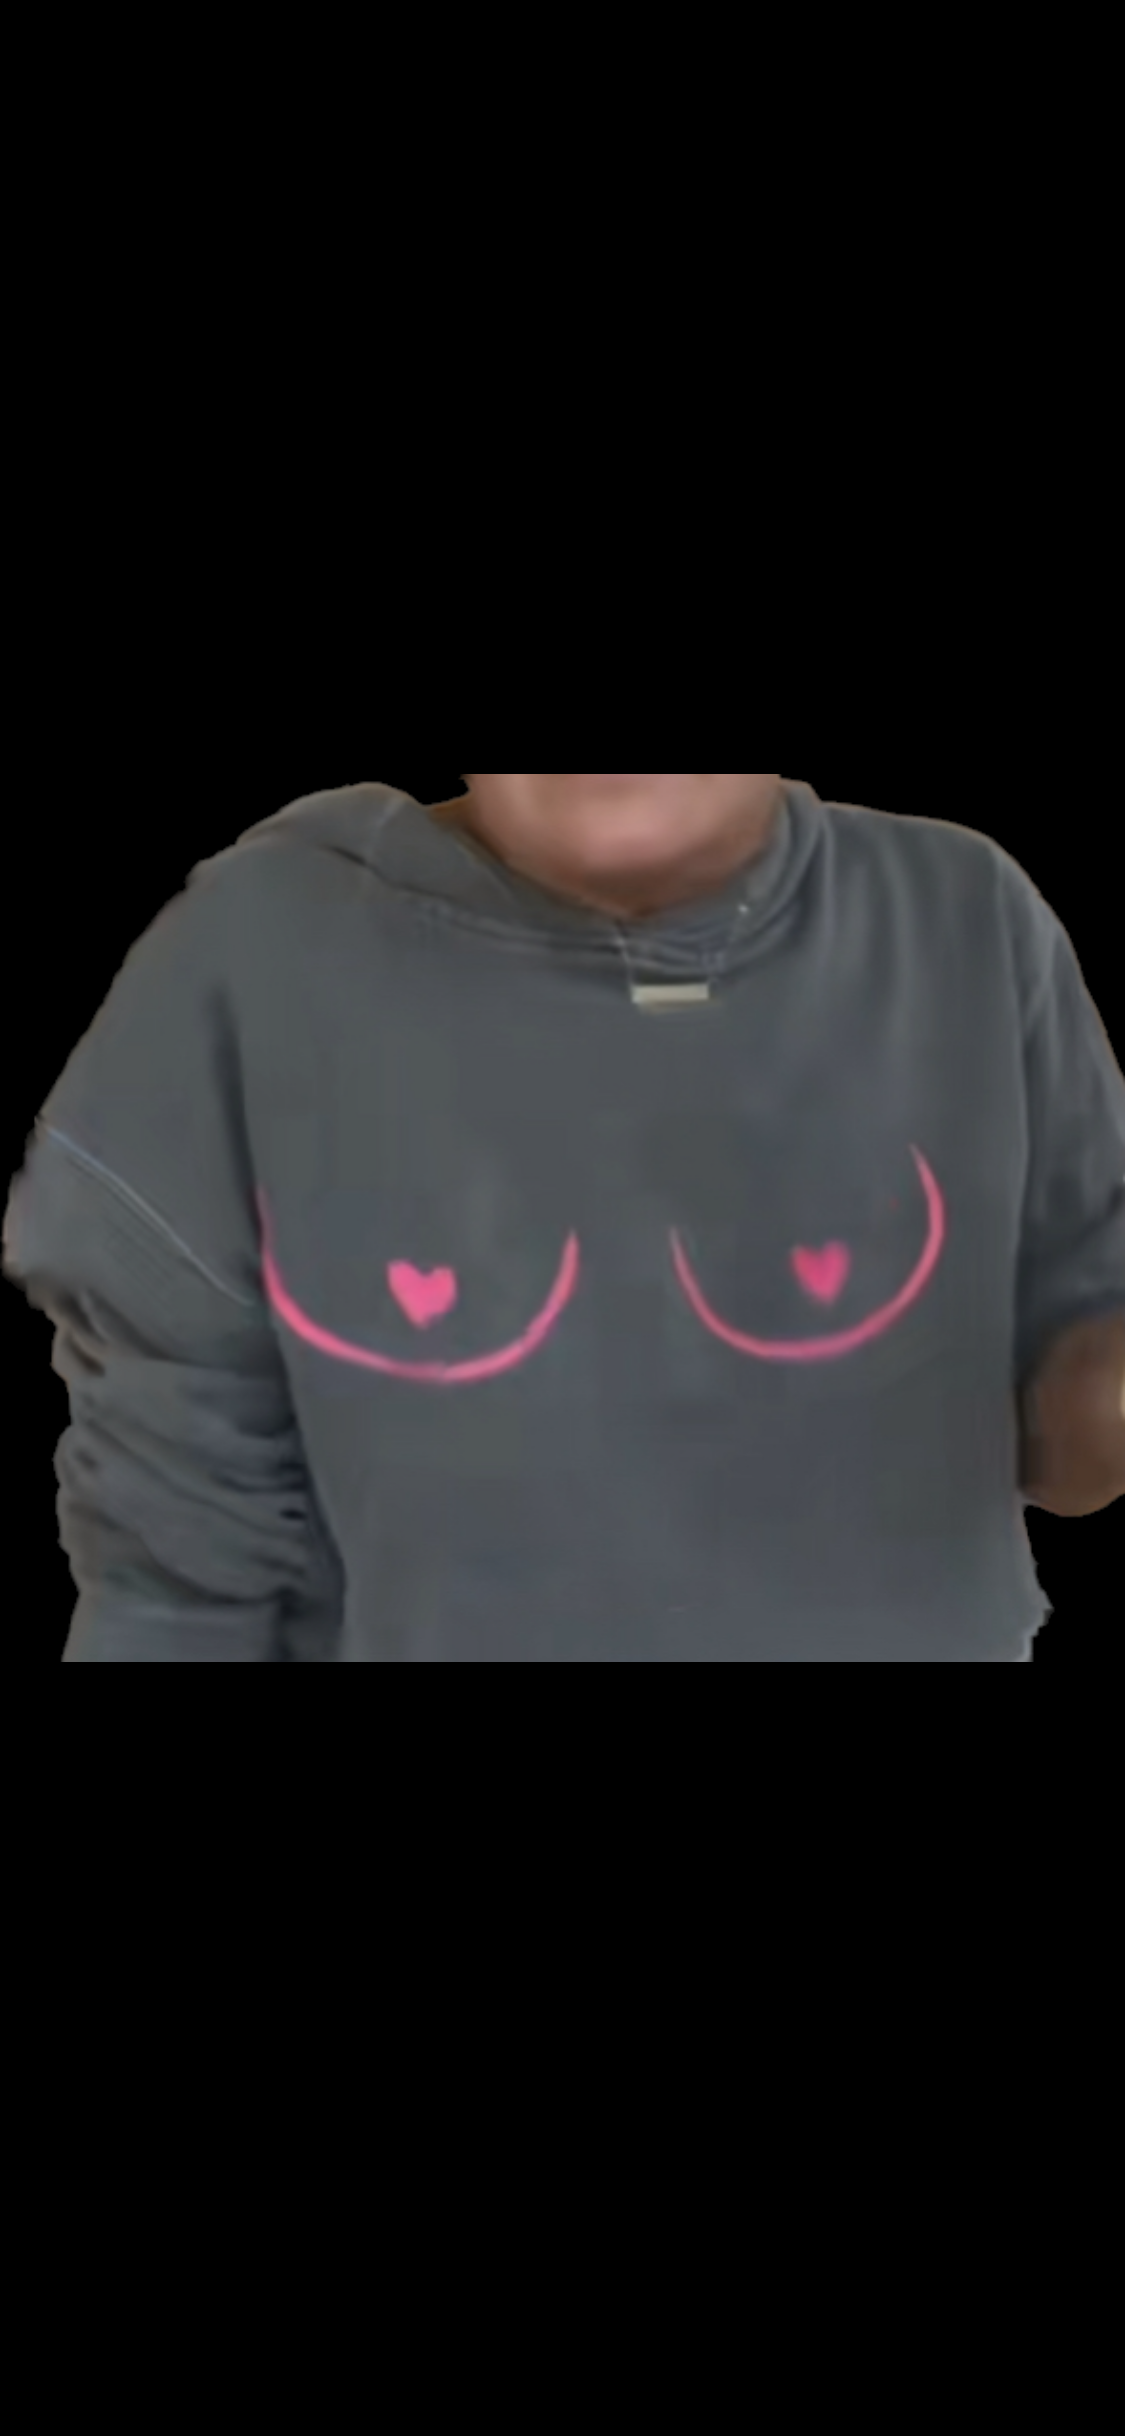 Heart nips sweater